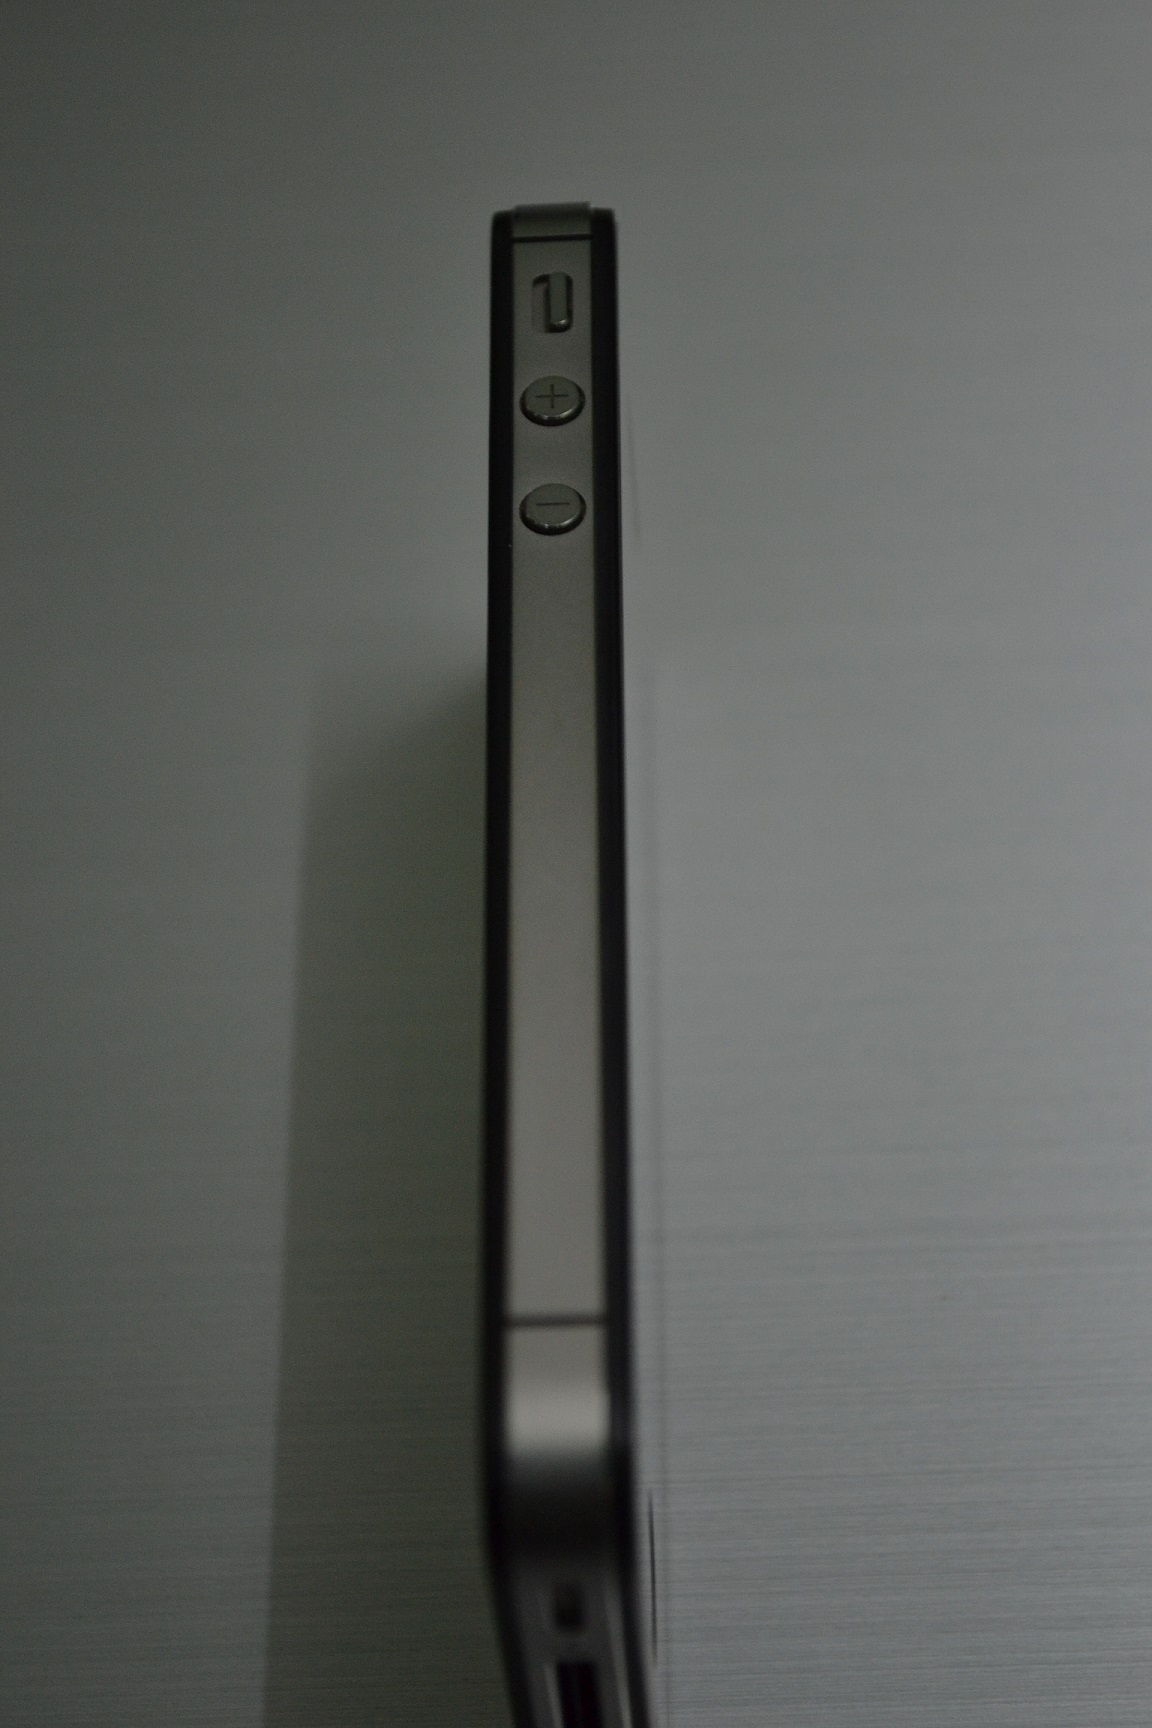 iPhone 4S (9).JPG